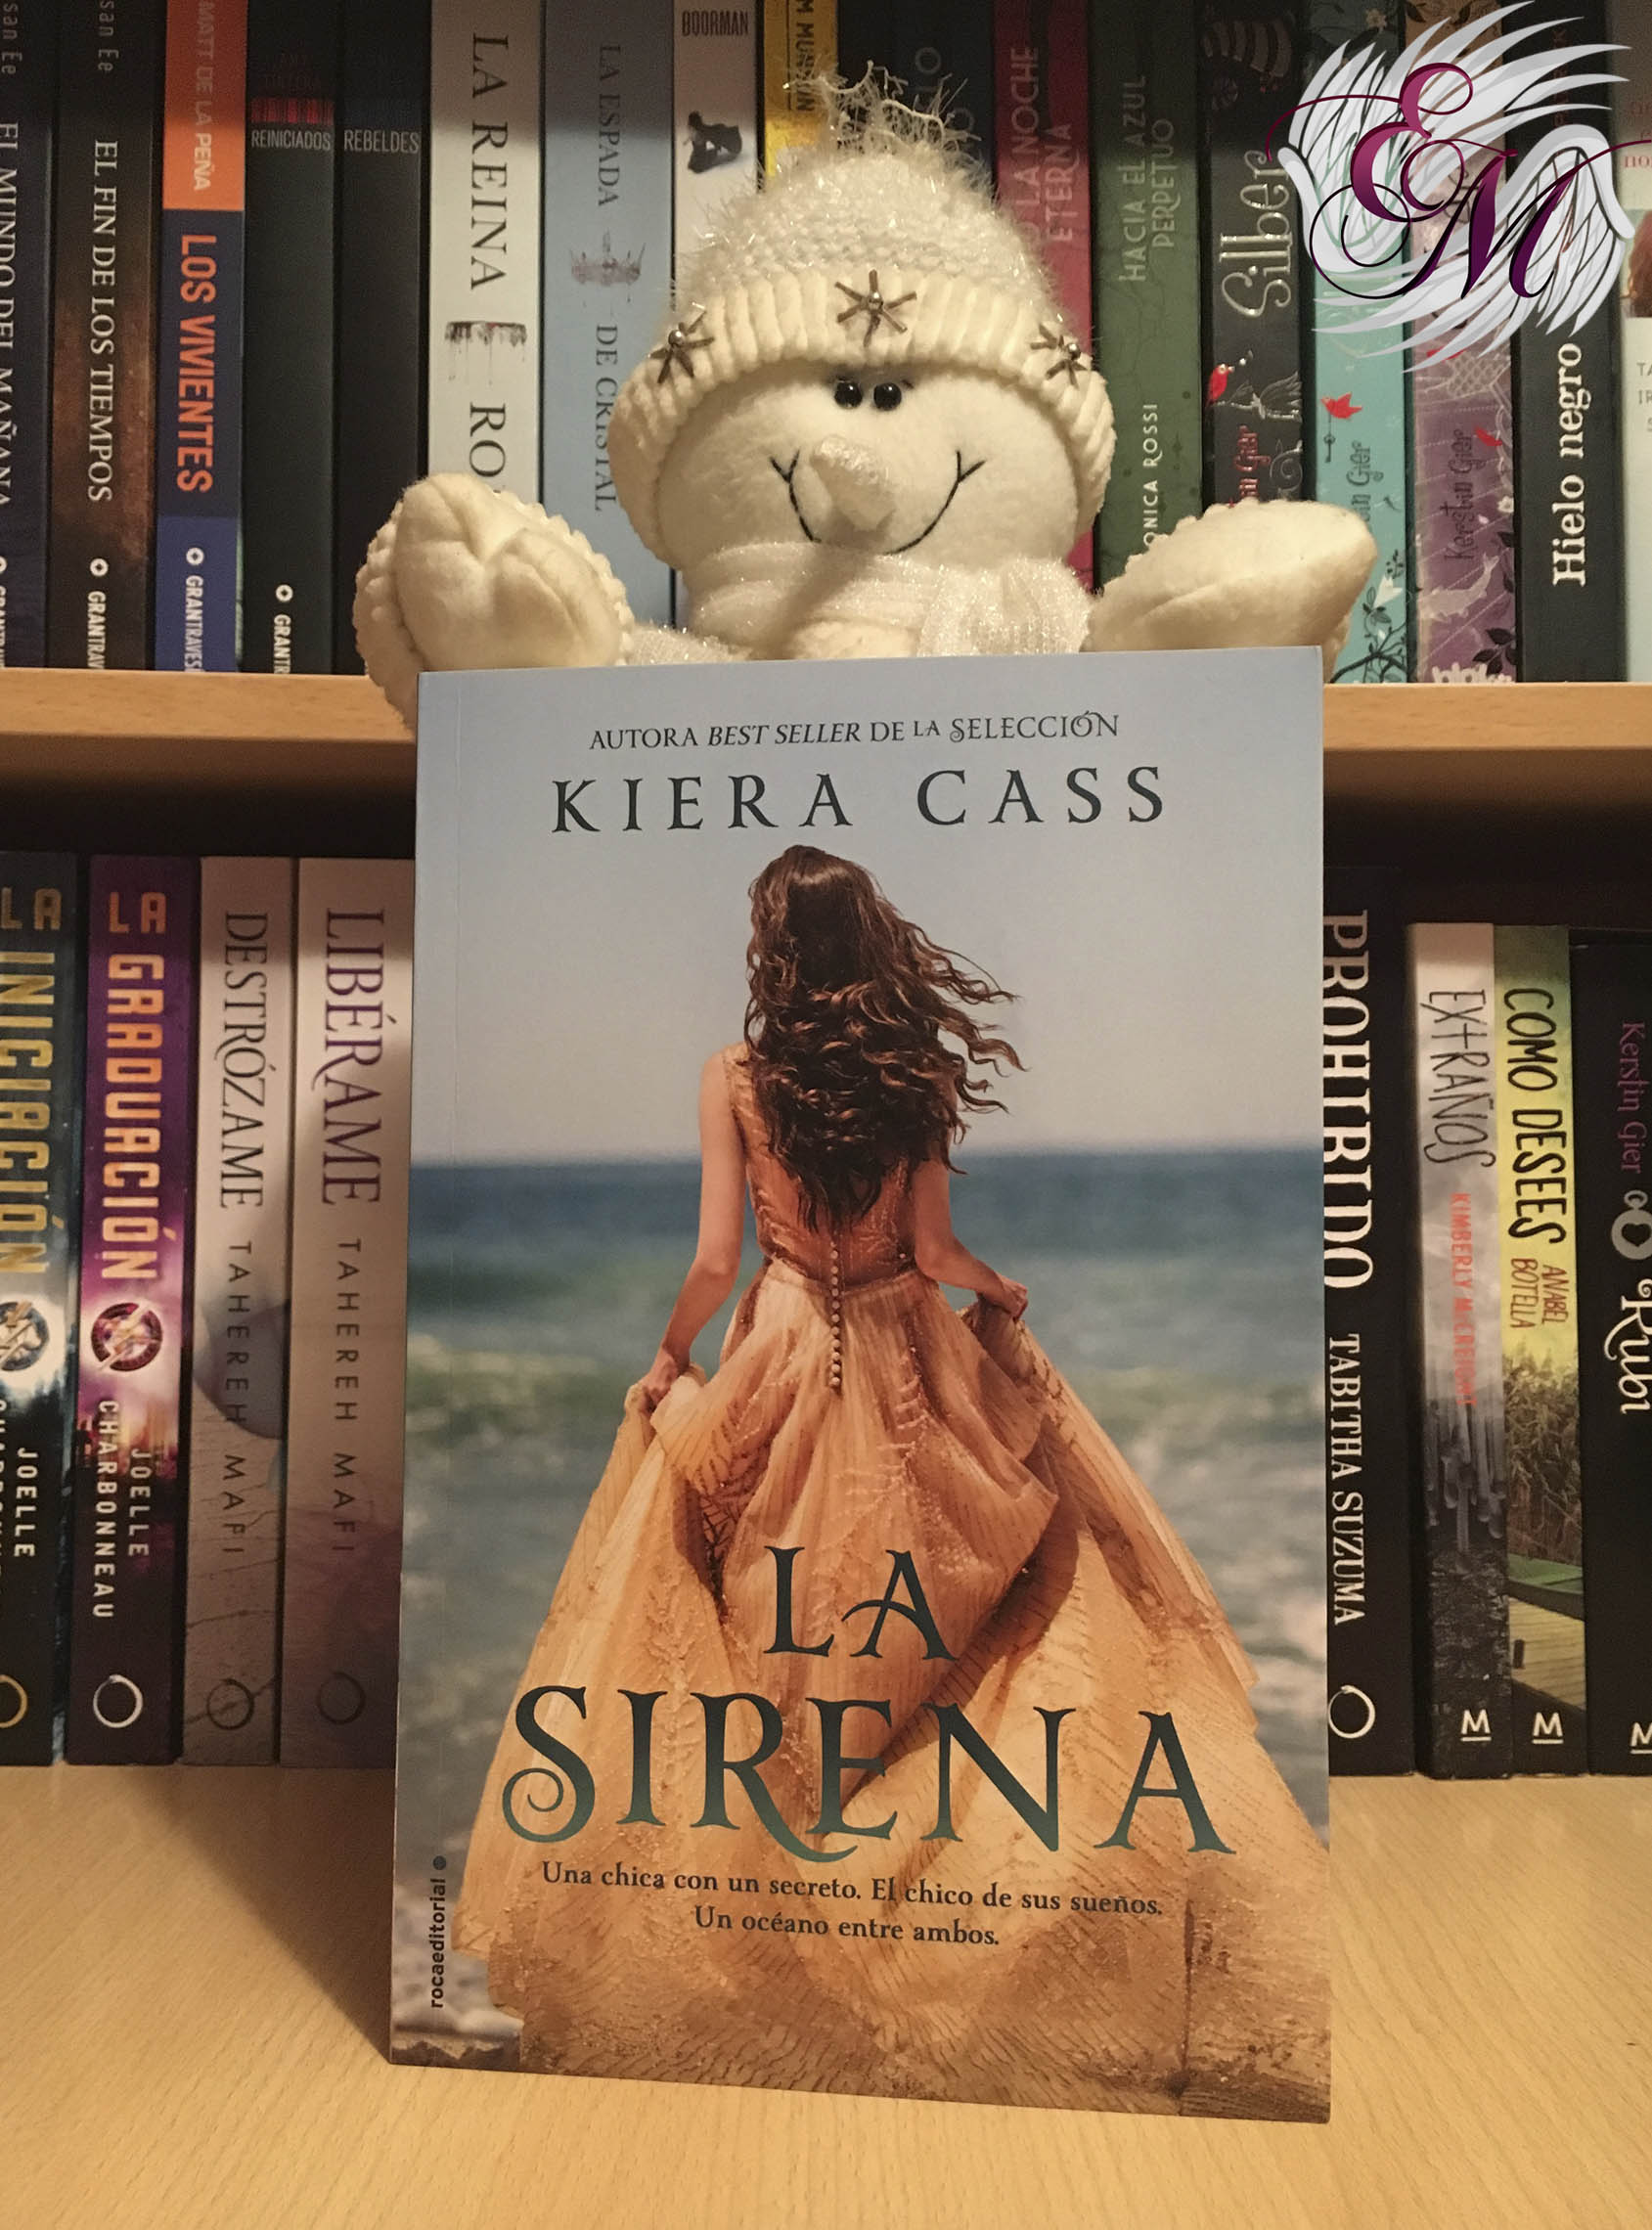 La Sirena, de Kiera Cass - Reseña